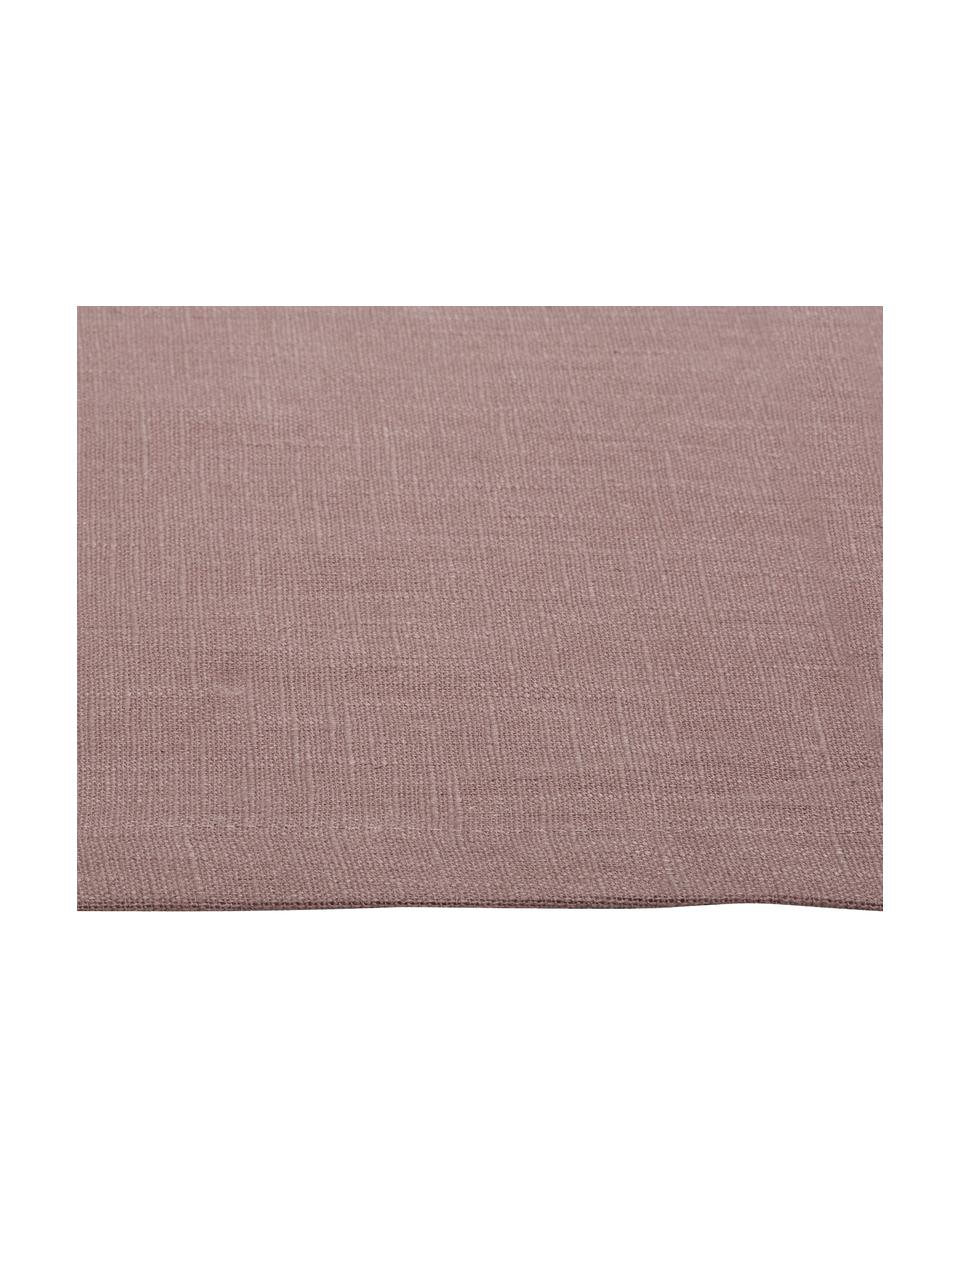 Mantel individual de lino Linnea, 95% lino, 5% algodón, Marrón, An 38 x L 48 cm